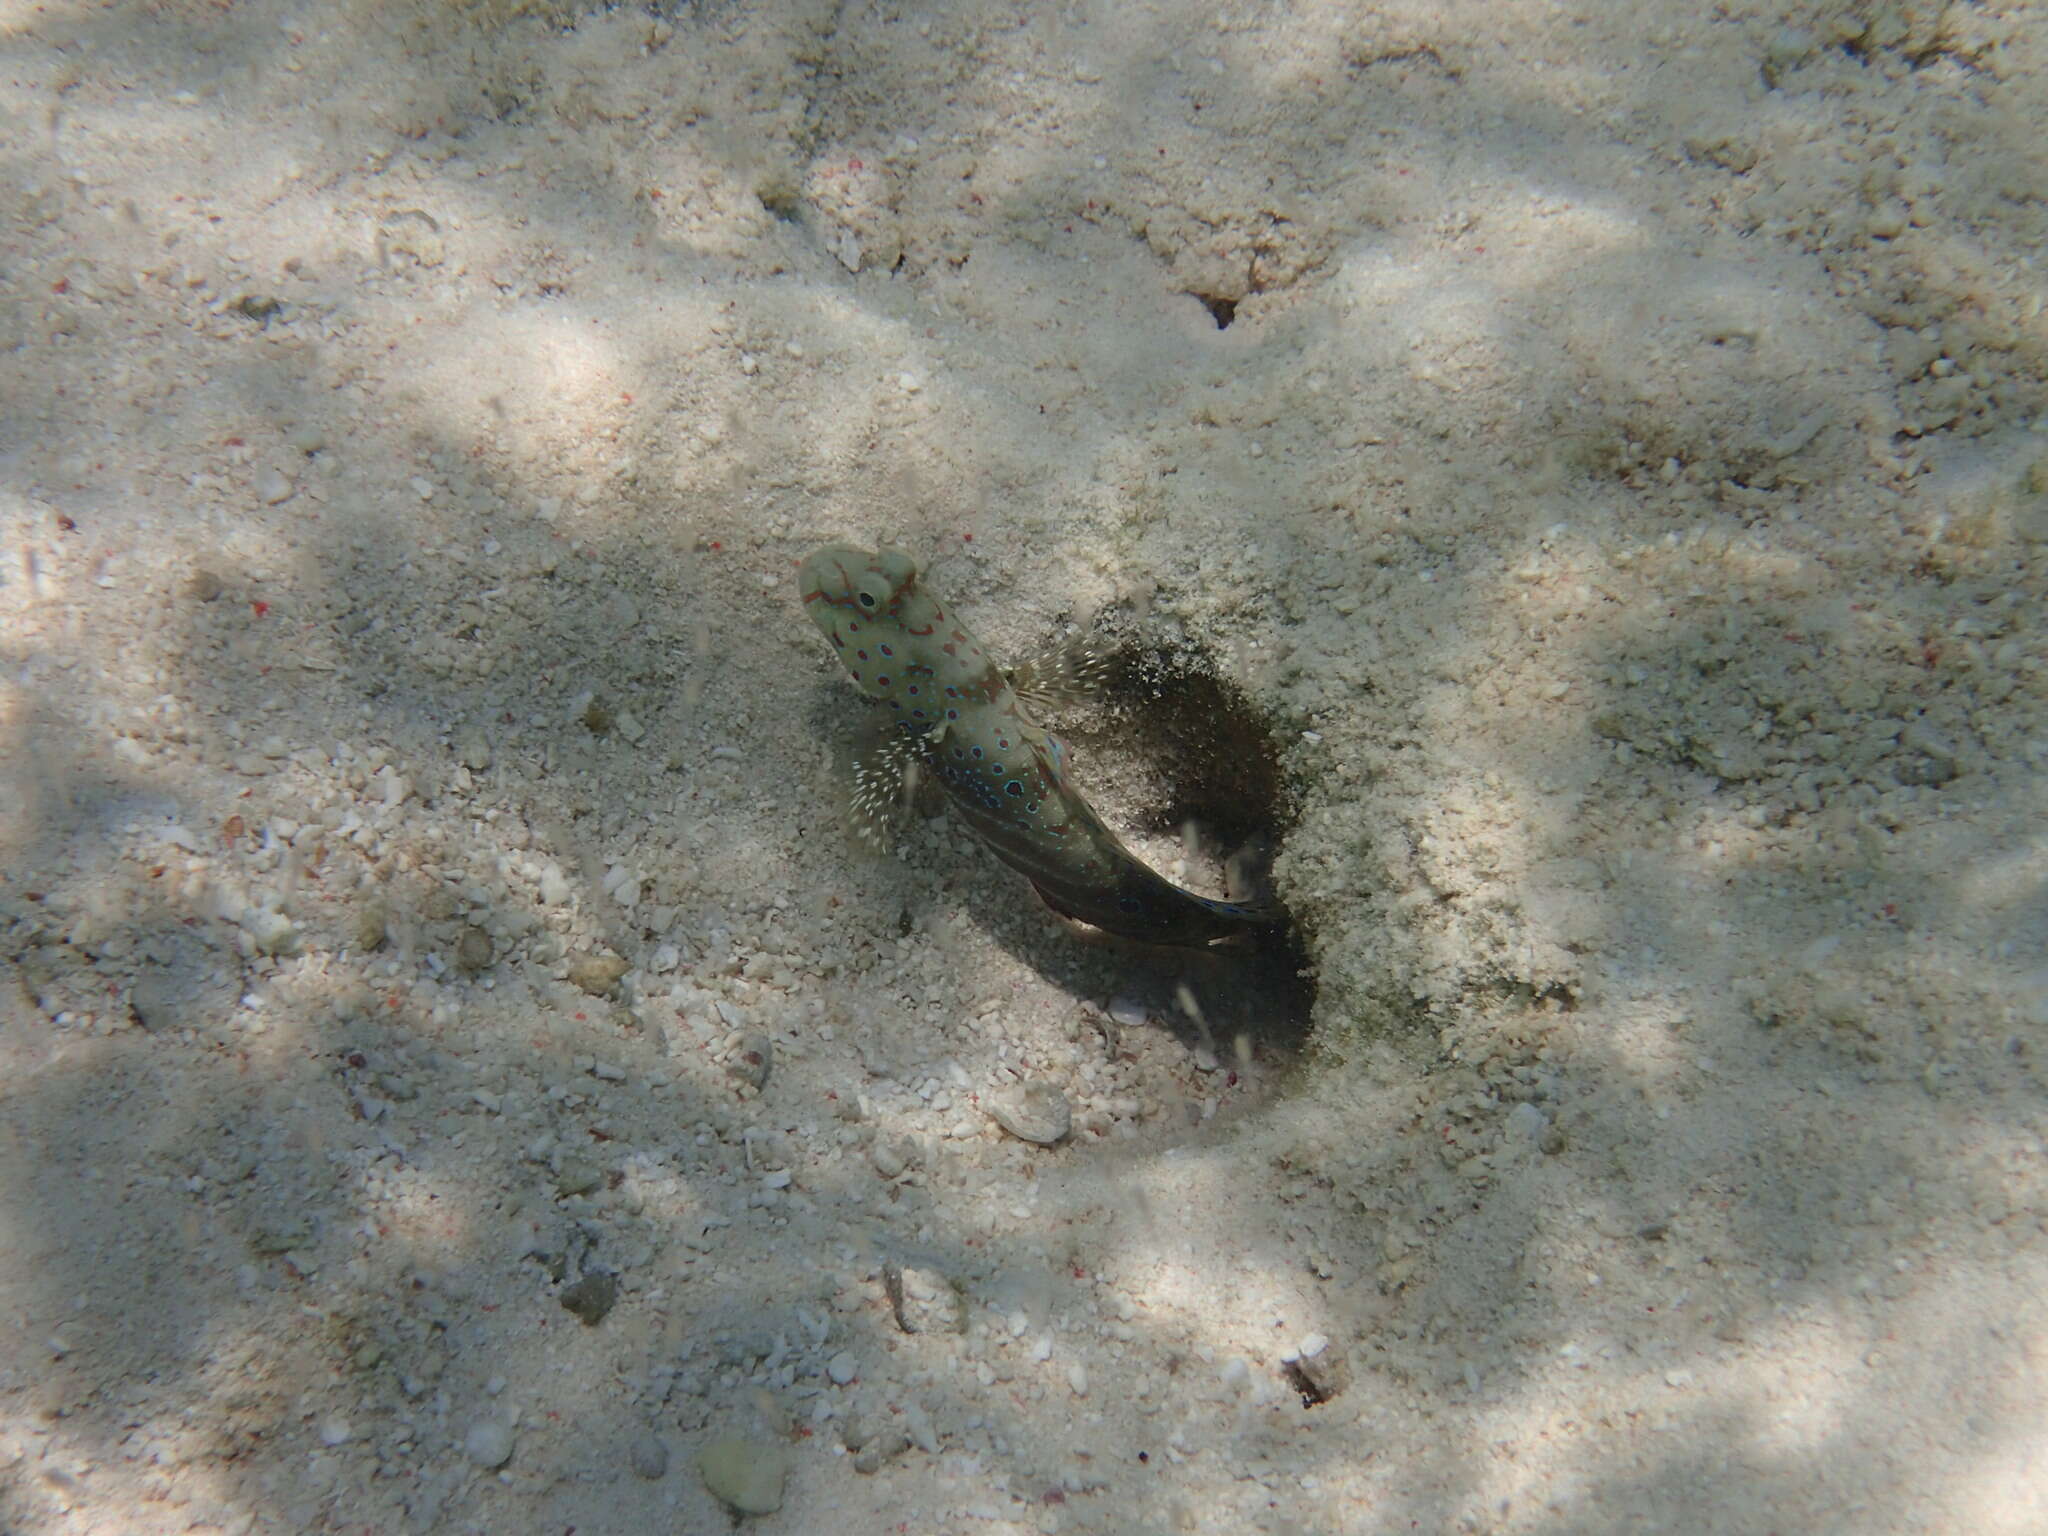 Image of Harlequin prawn-goby